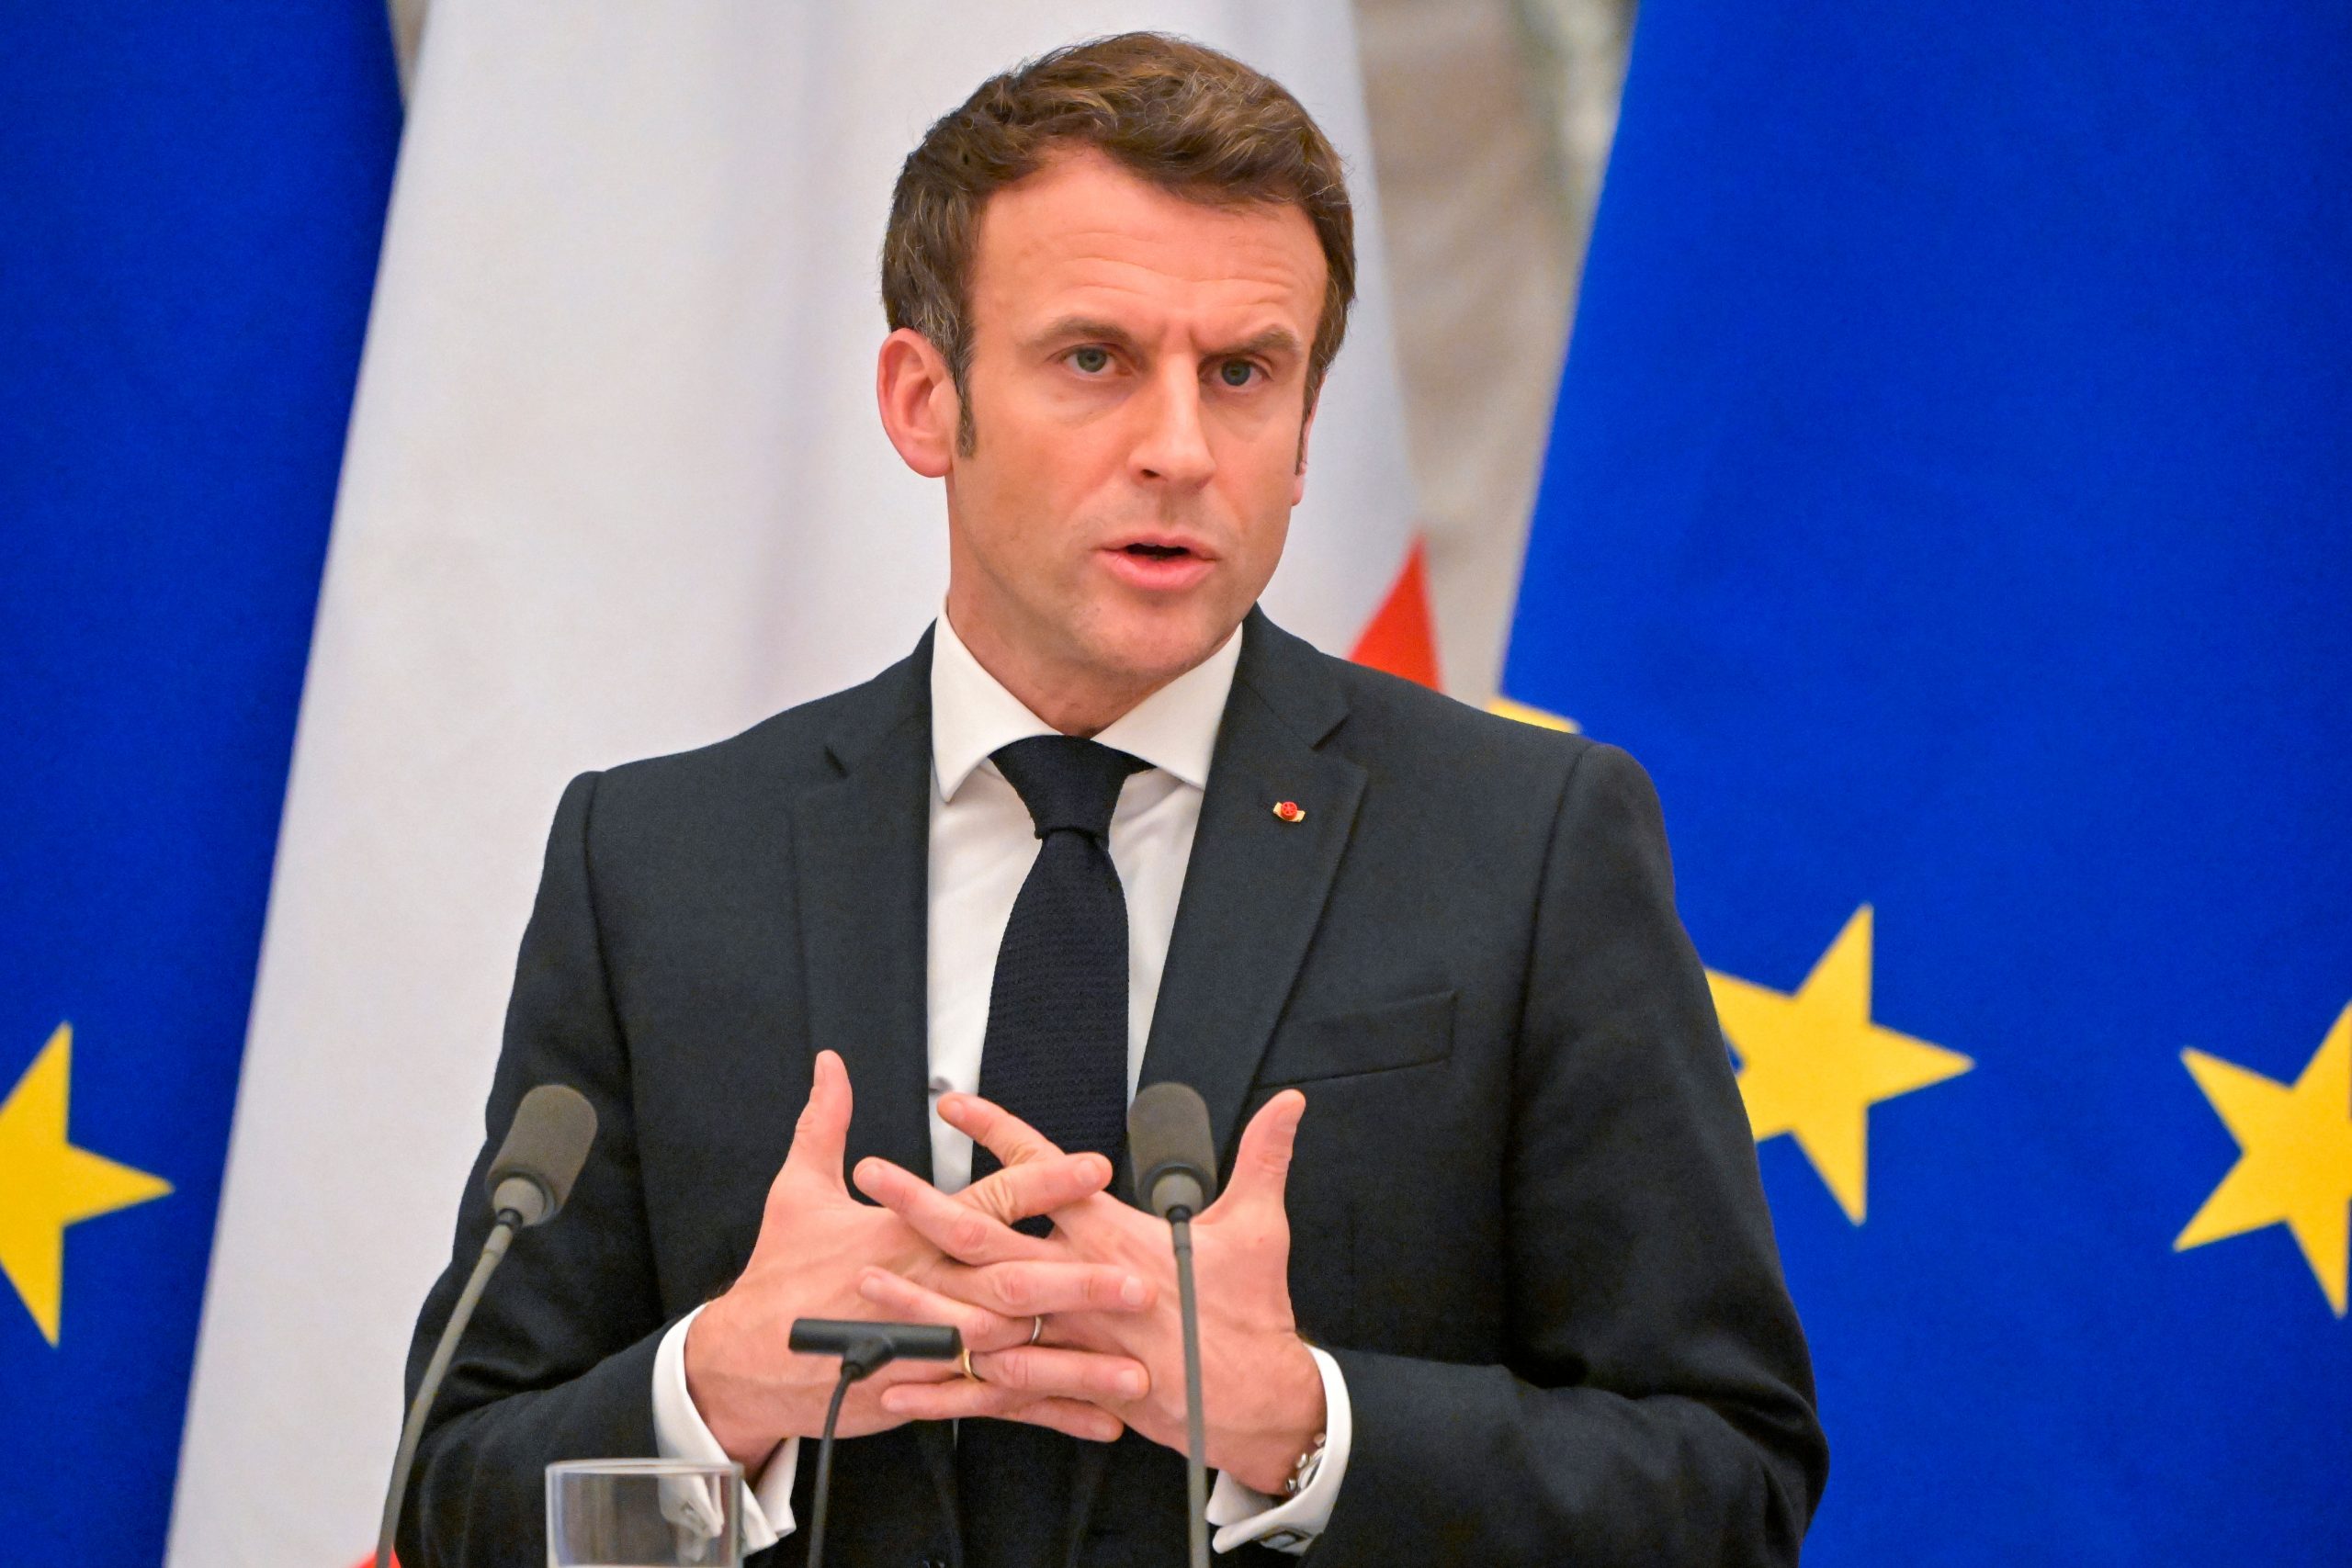 Emmanuel Macron to seek 2nd term in France’s April presidential election